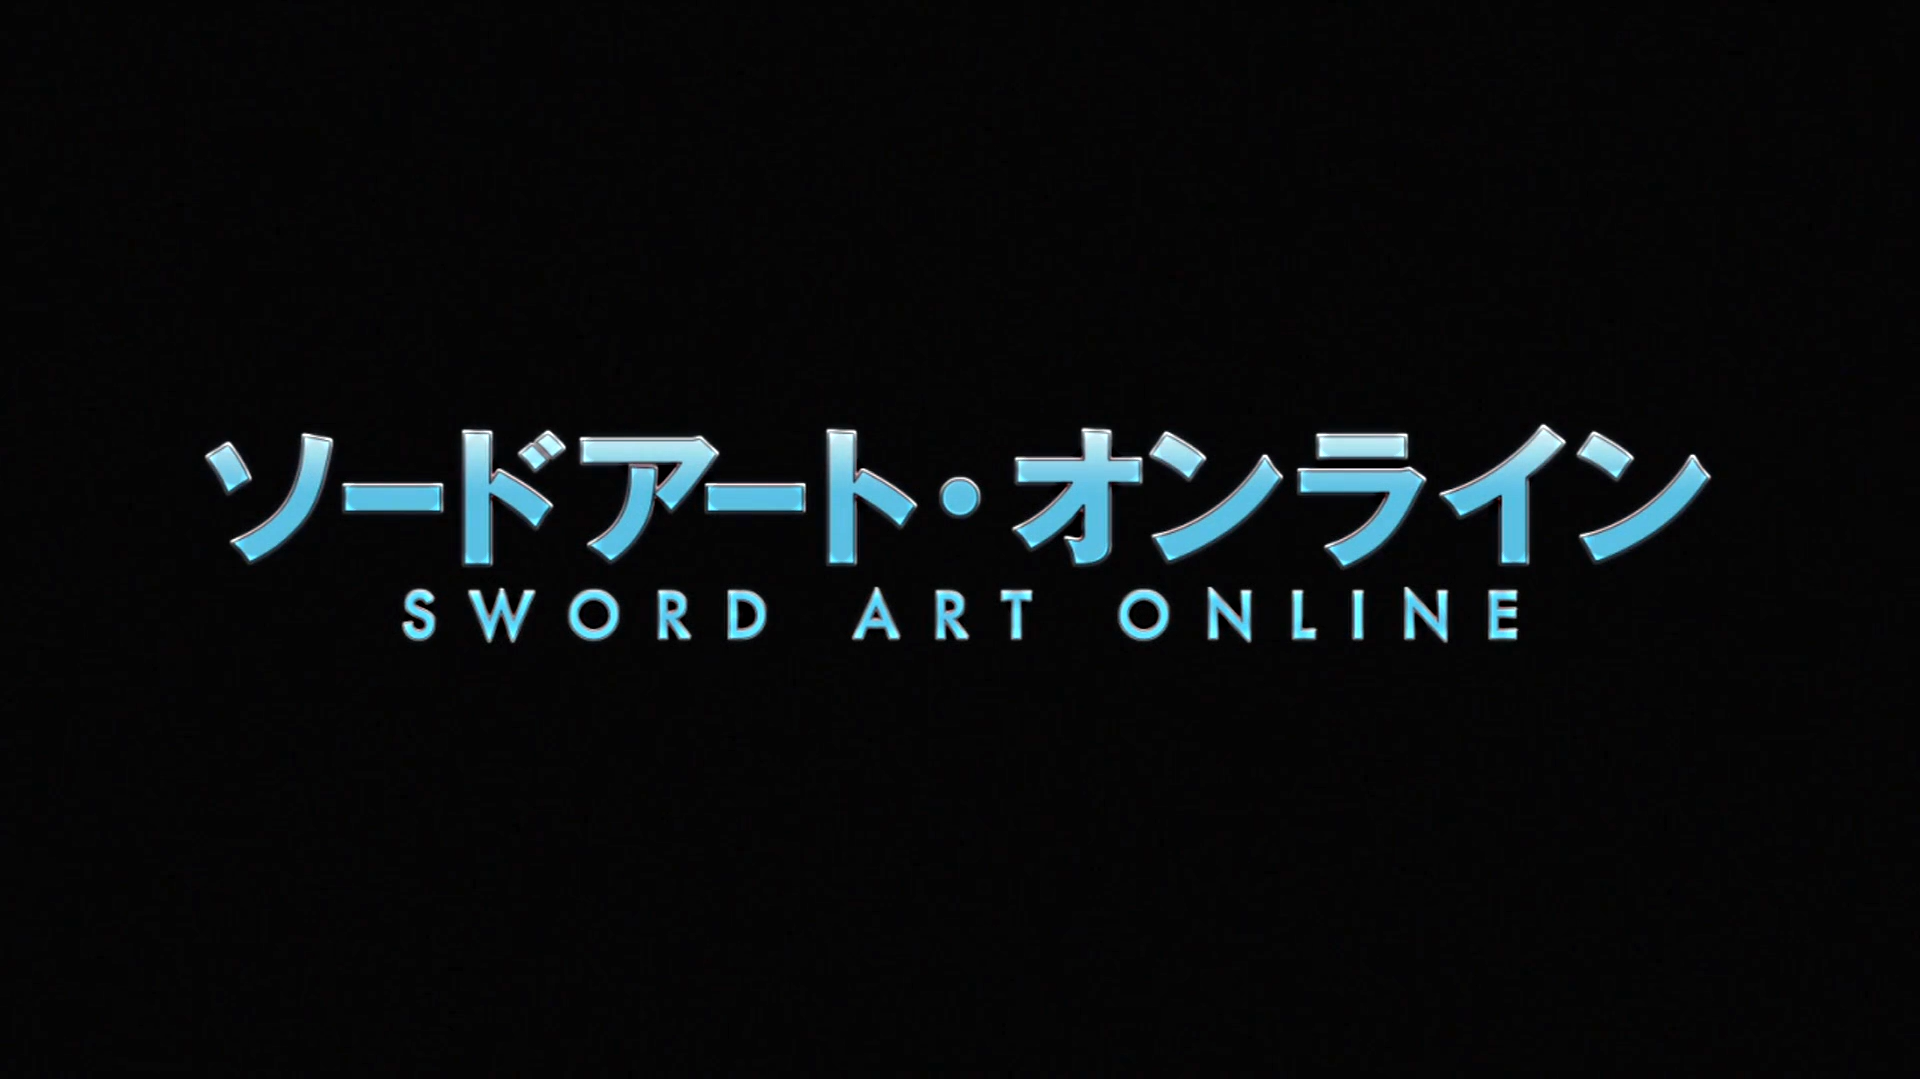 Sword Art Online svg #10, Download drawings